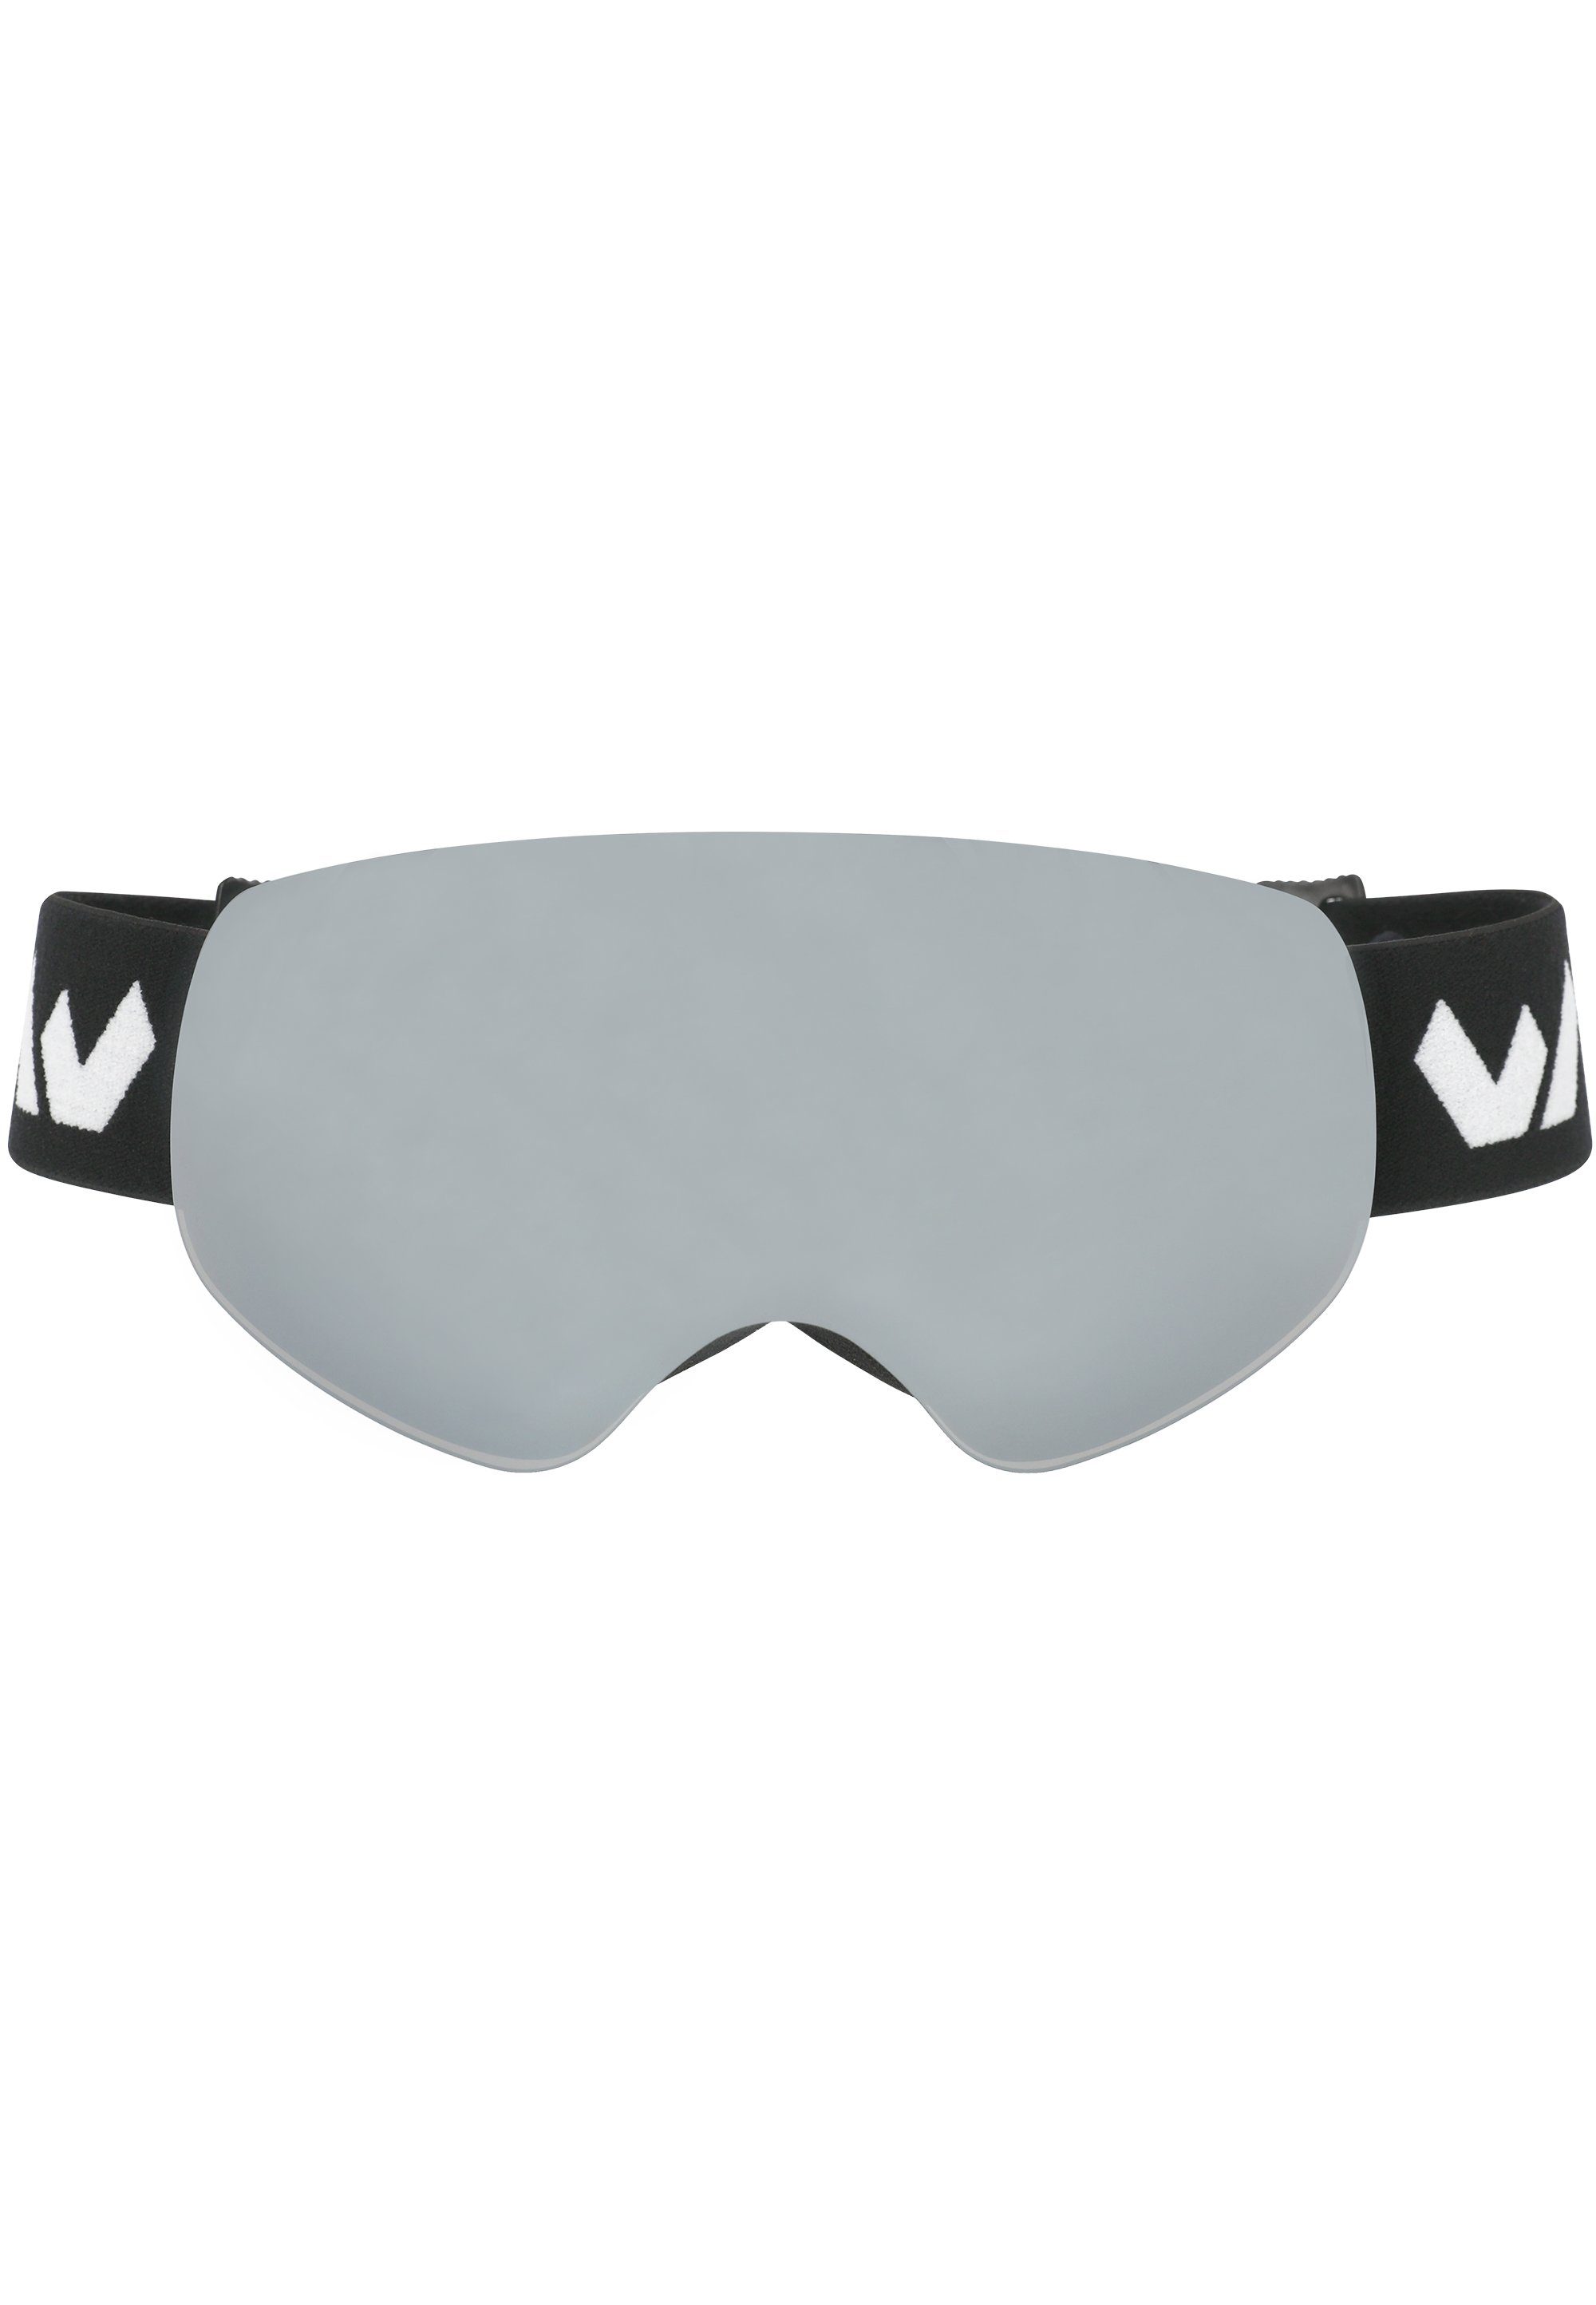 WHISTLER Skibrille WS900 Jr., im rahmenlosen Design